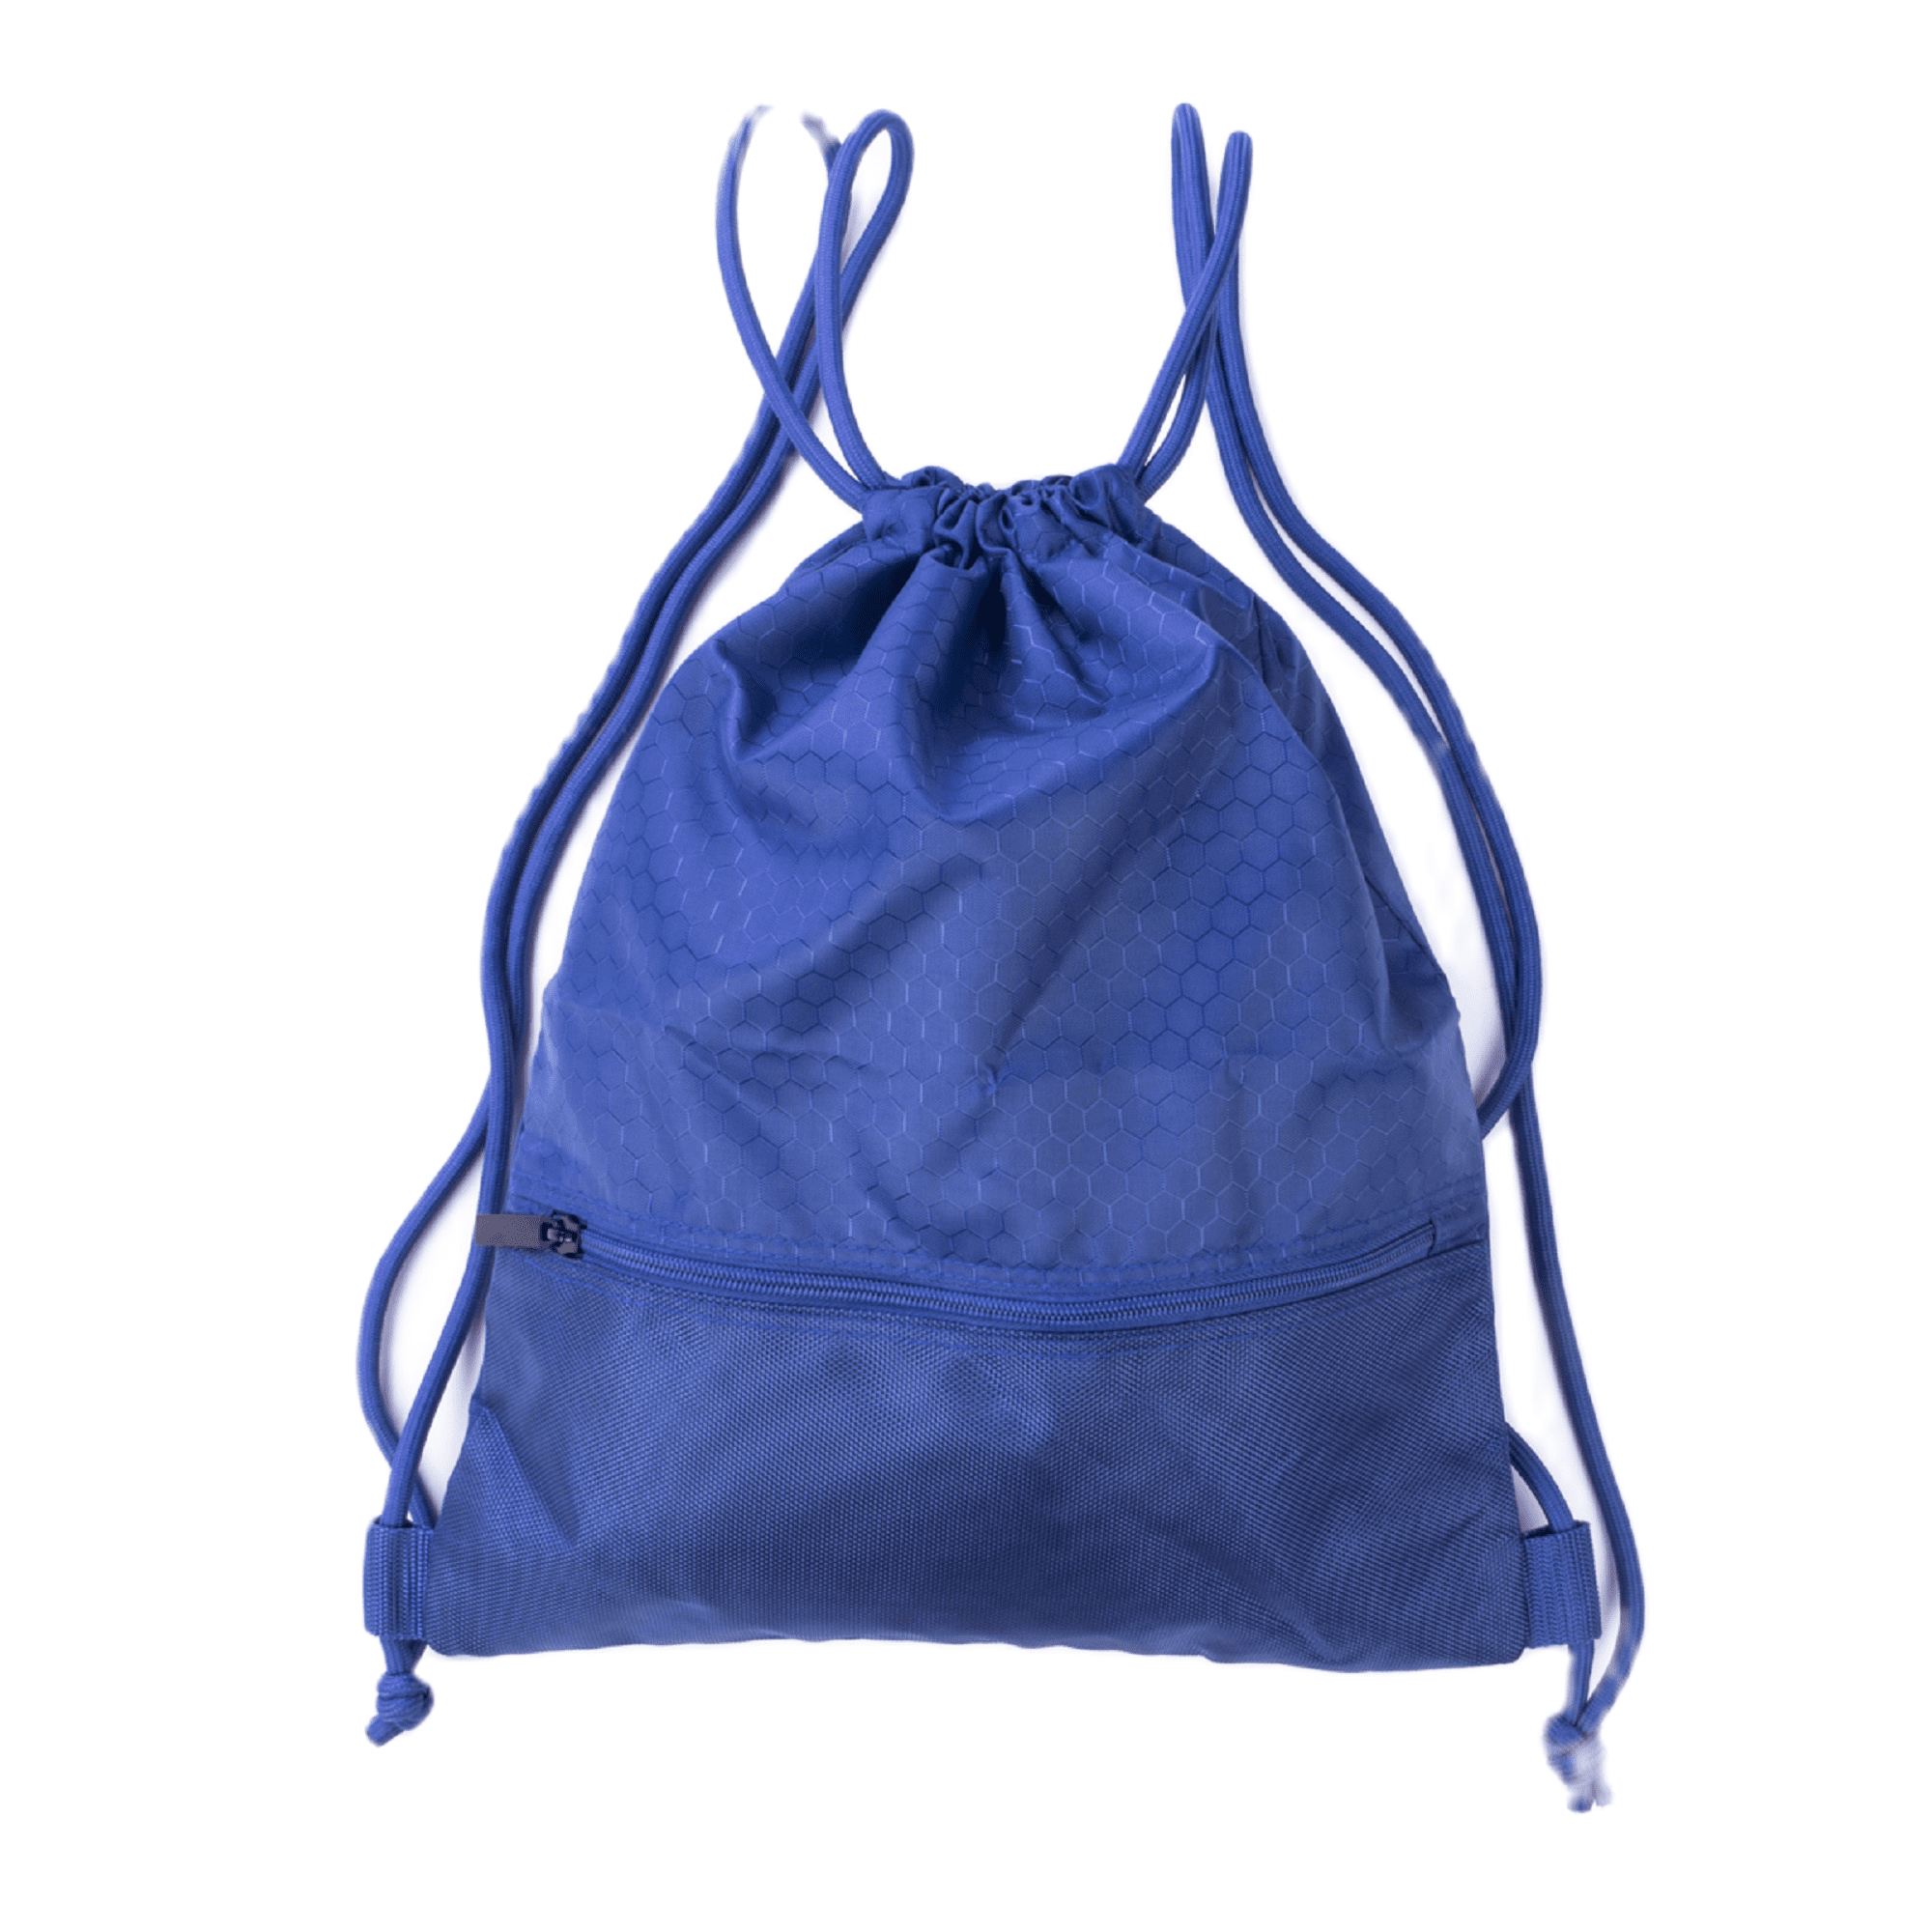 String Drawstring Backpack Cinch Sack Gym Tote Bag School Sport Daily Gym Pack